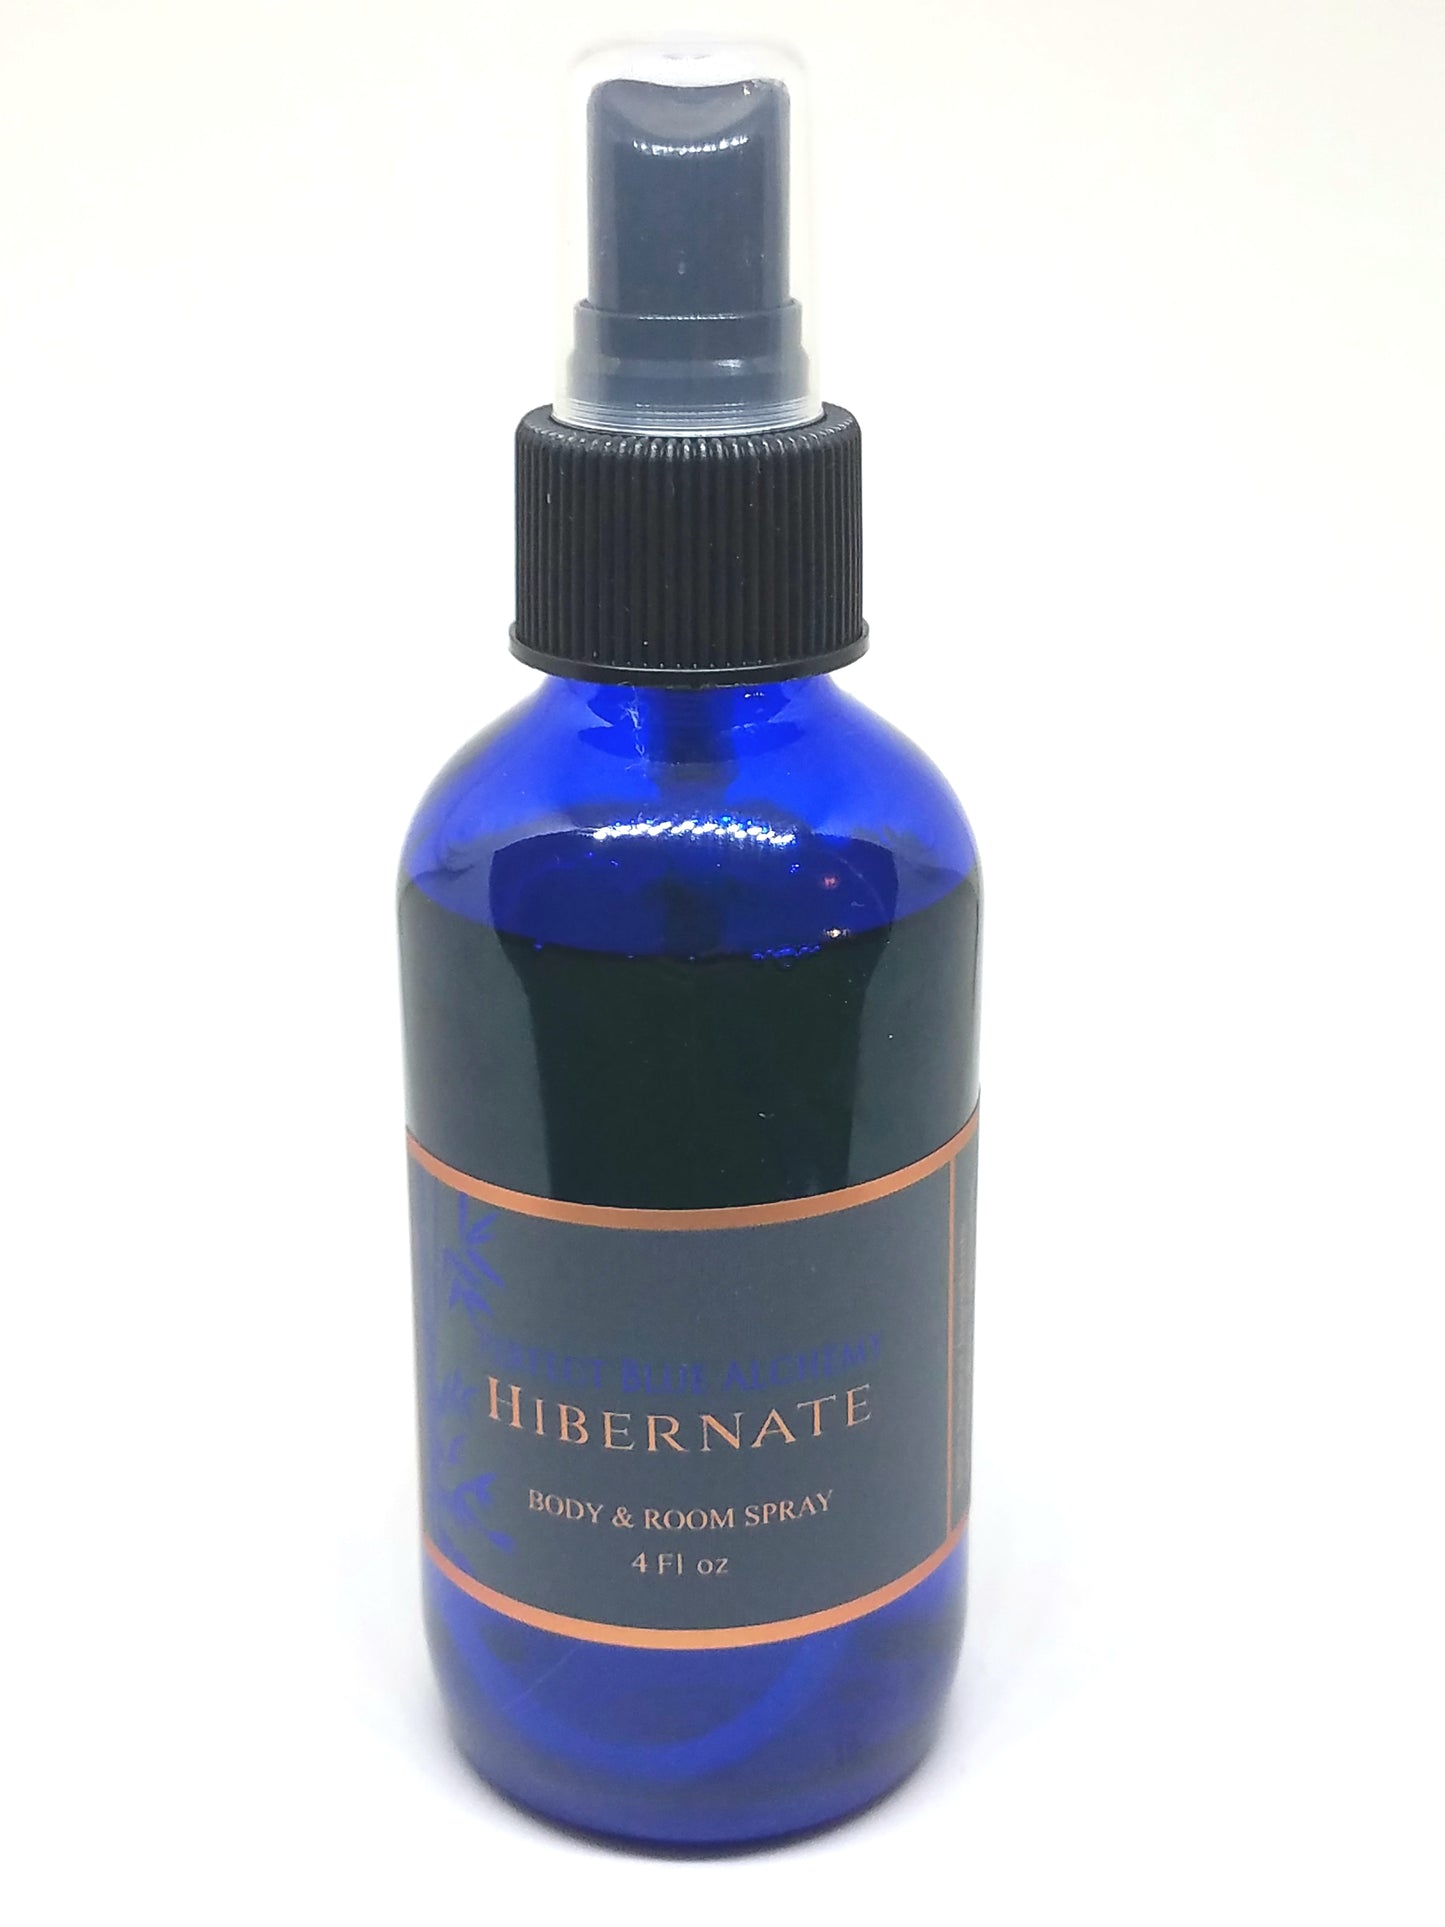 Hibernate Perfume Body & Room Spray